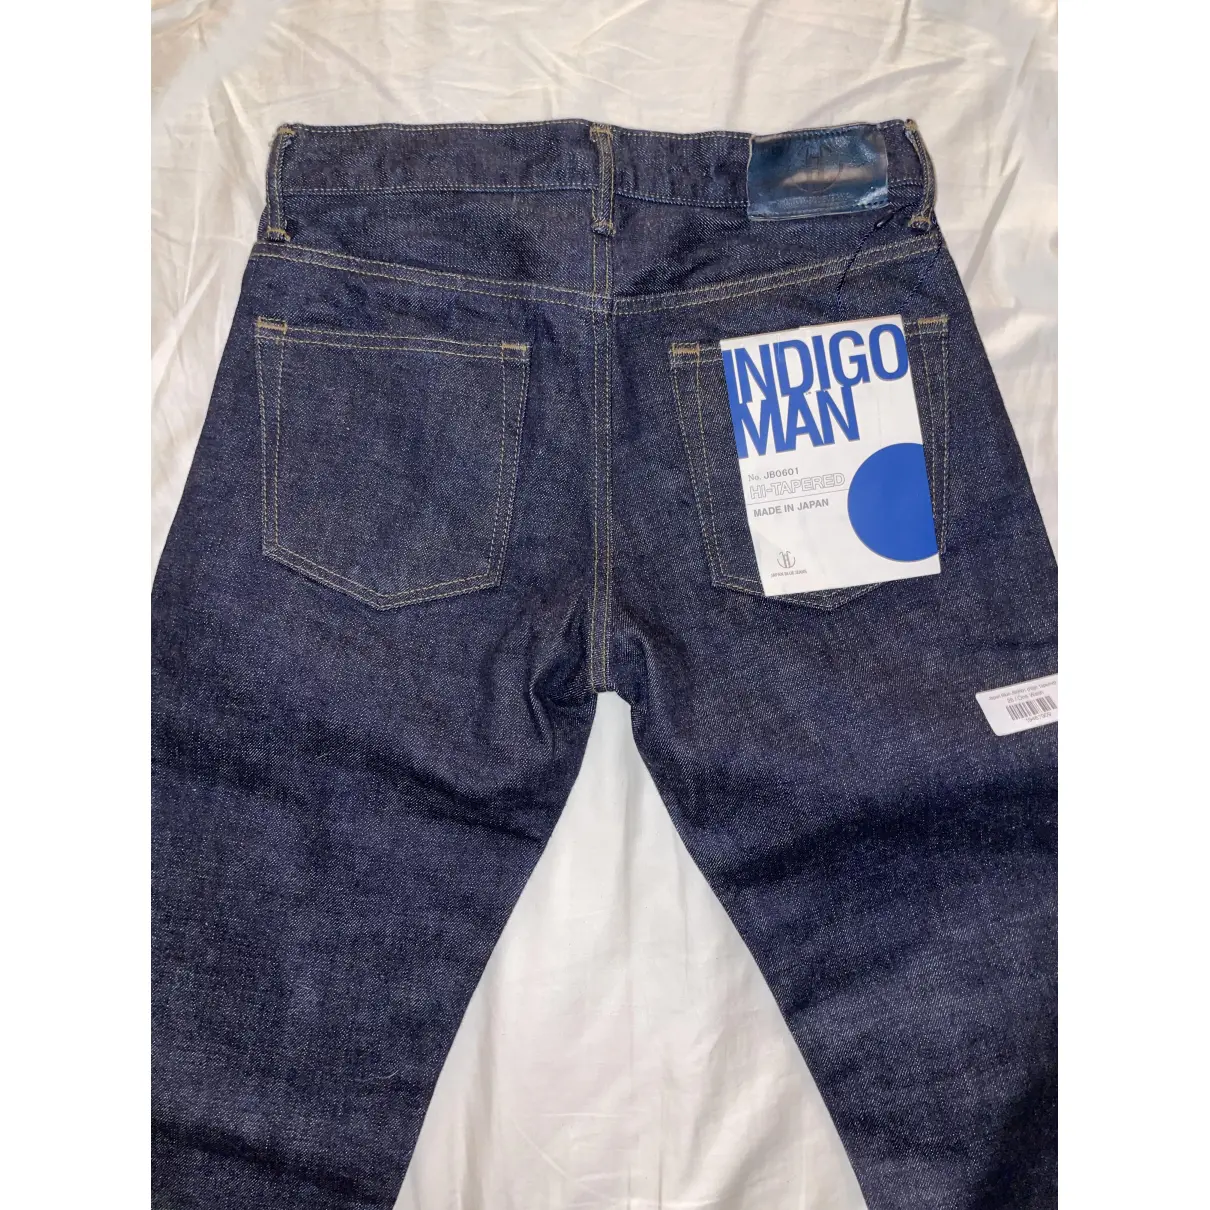 Buy Japan Blue Jeans online